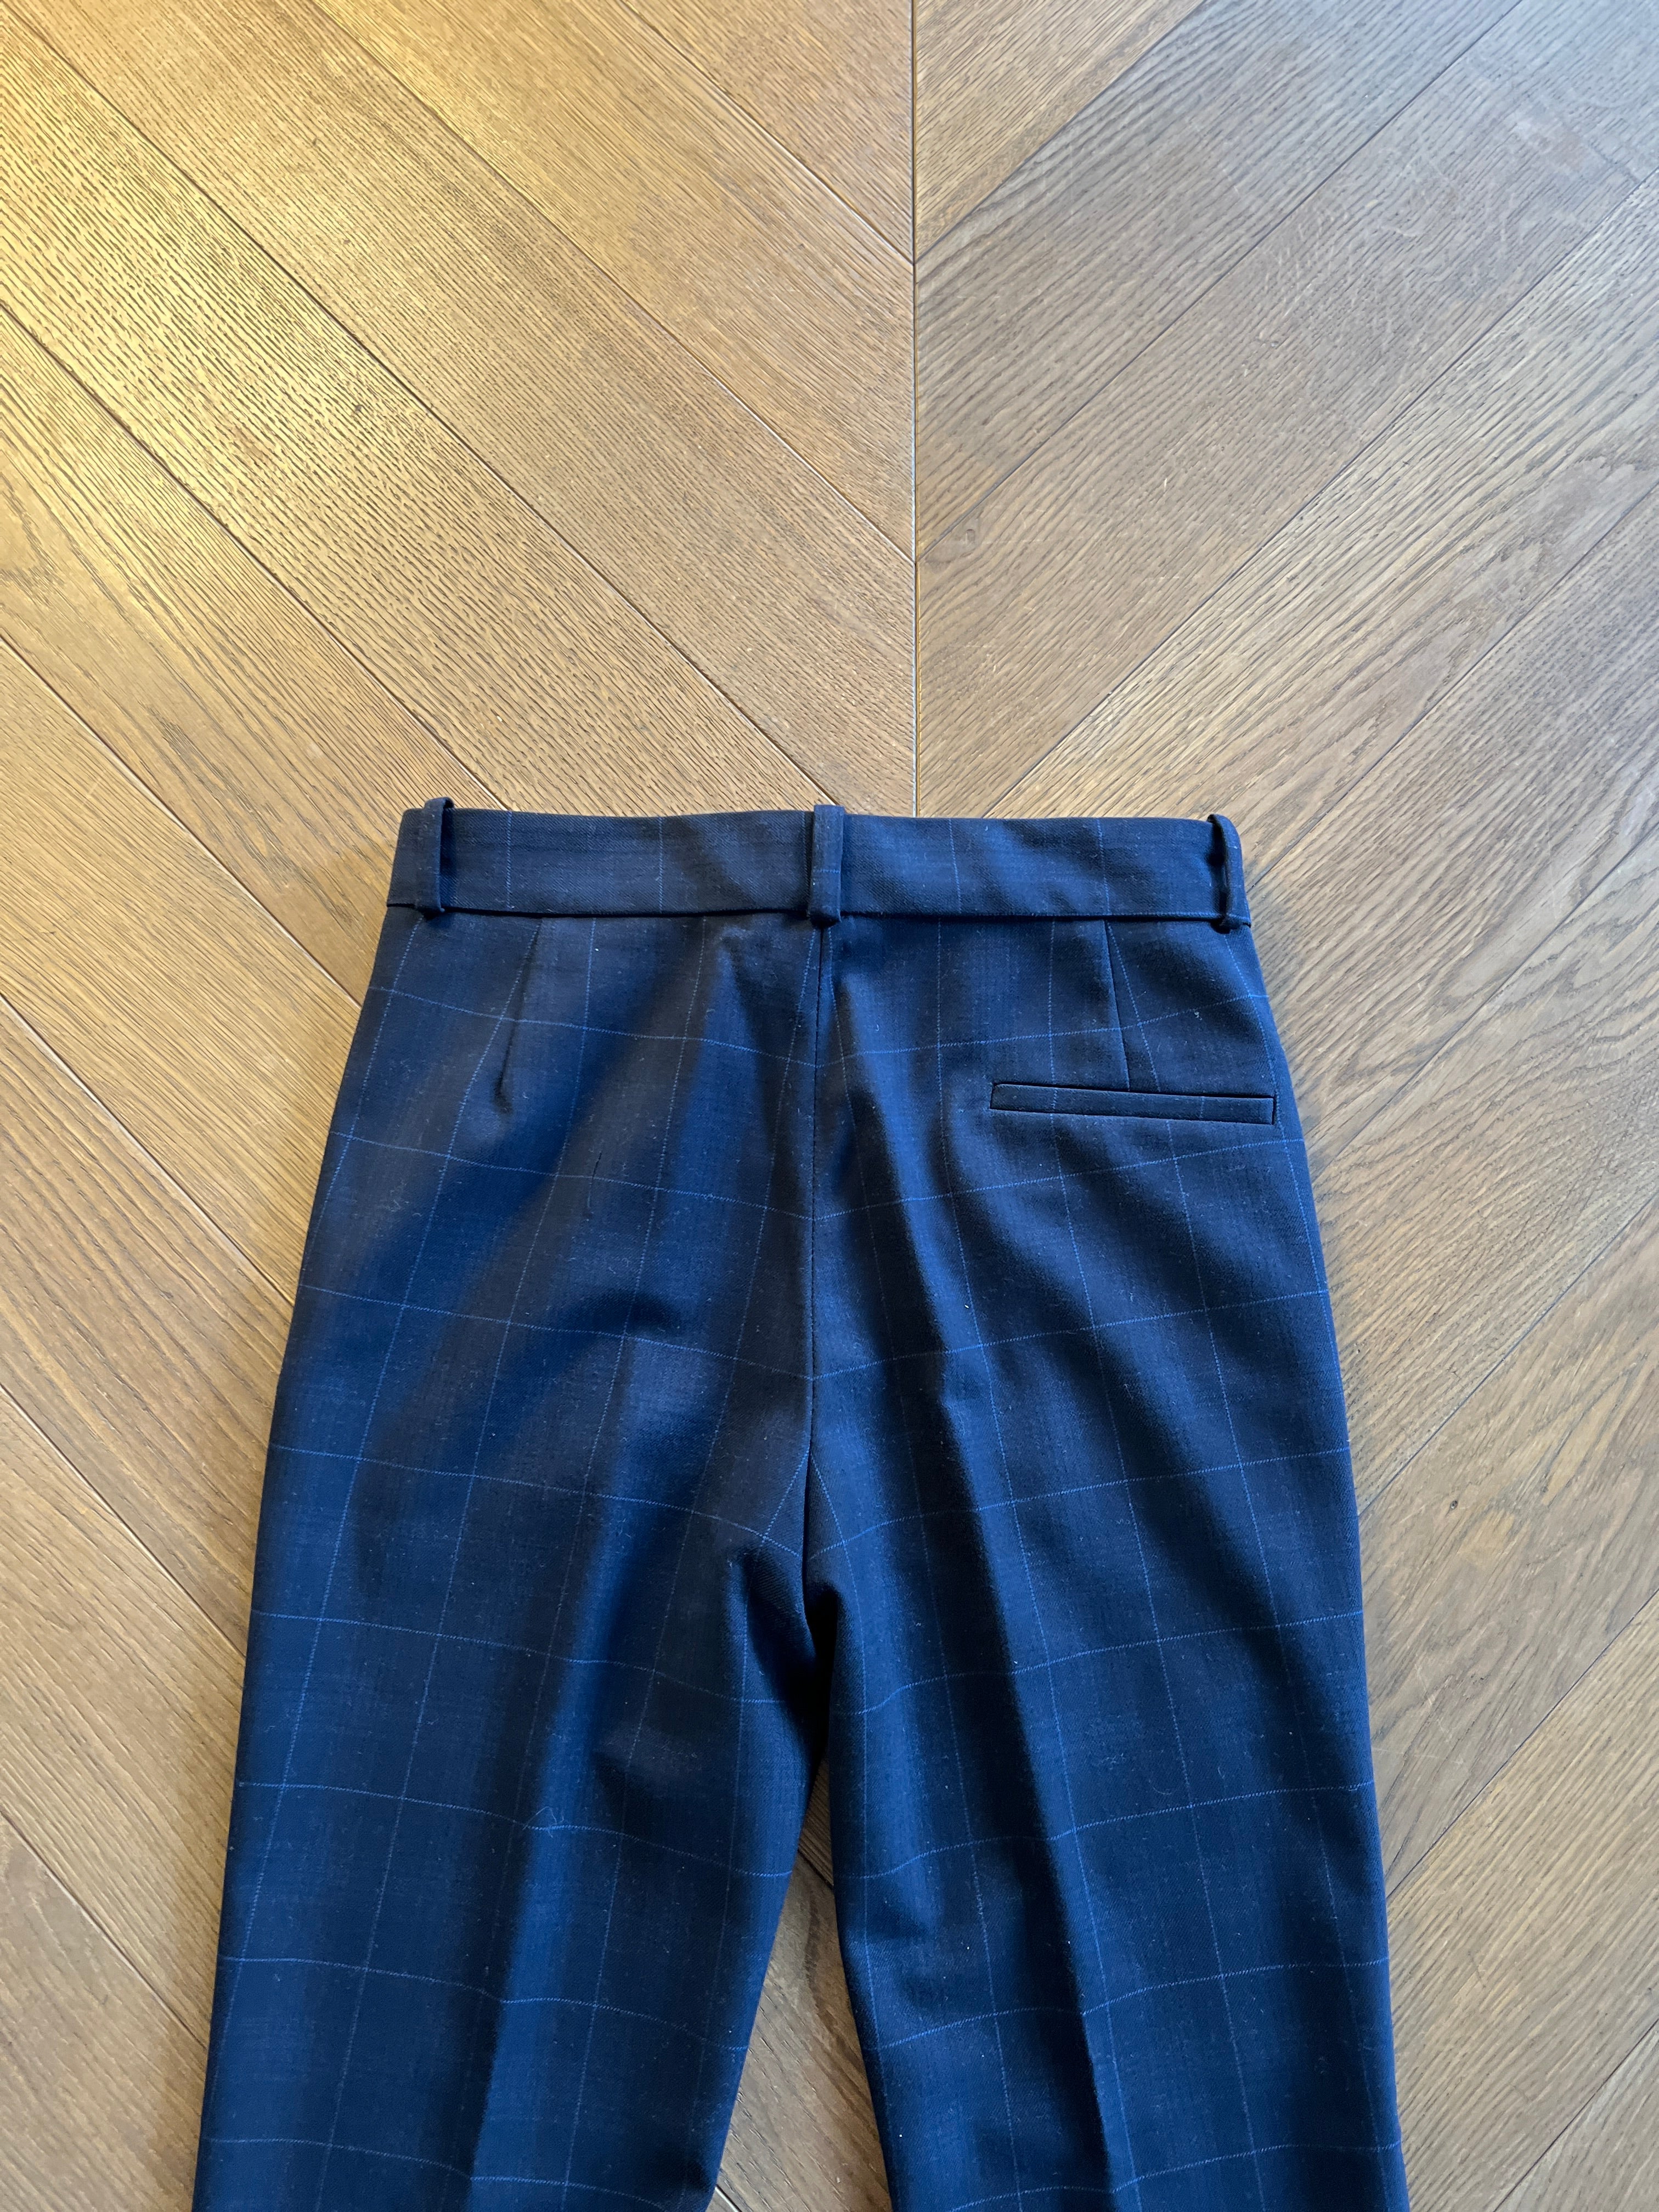 Pantalon Maje bleu marine à carreaux fondus